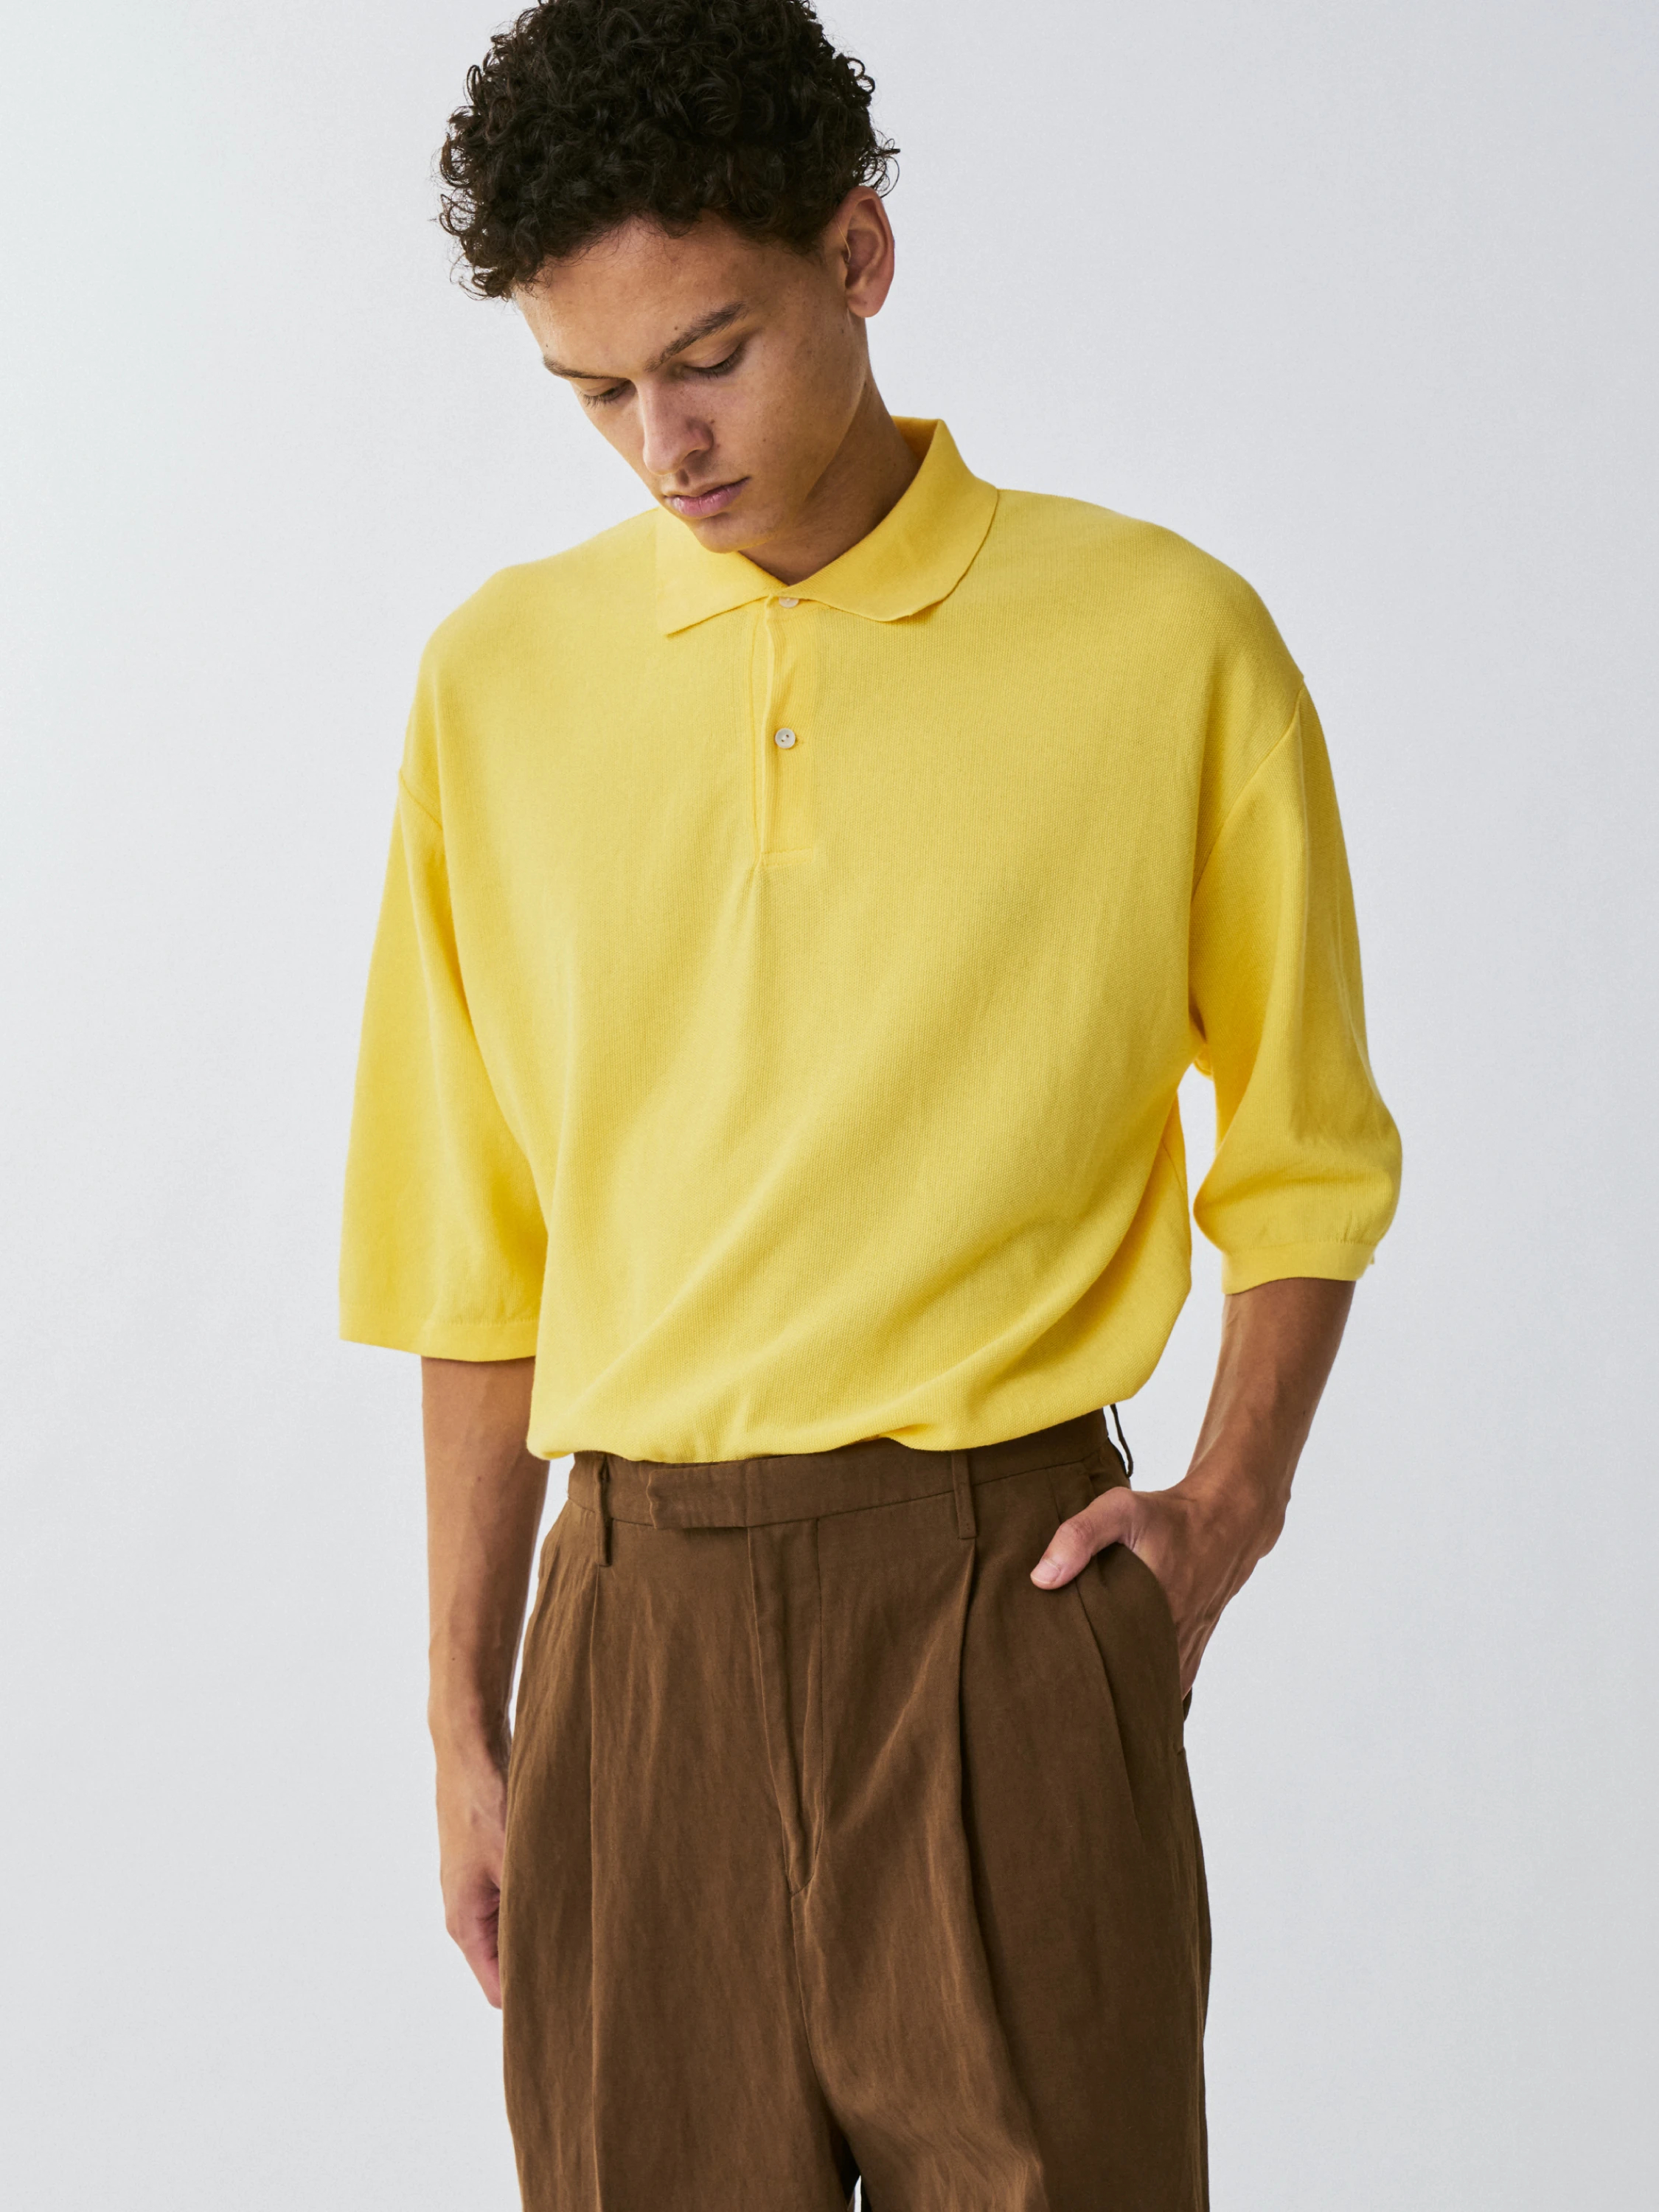 kaptain sunshine knit polo shirts | hartwellspremium.com